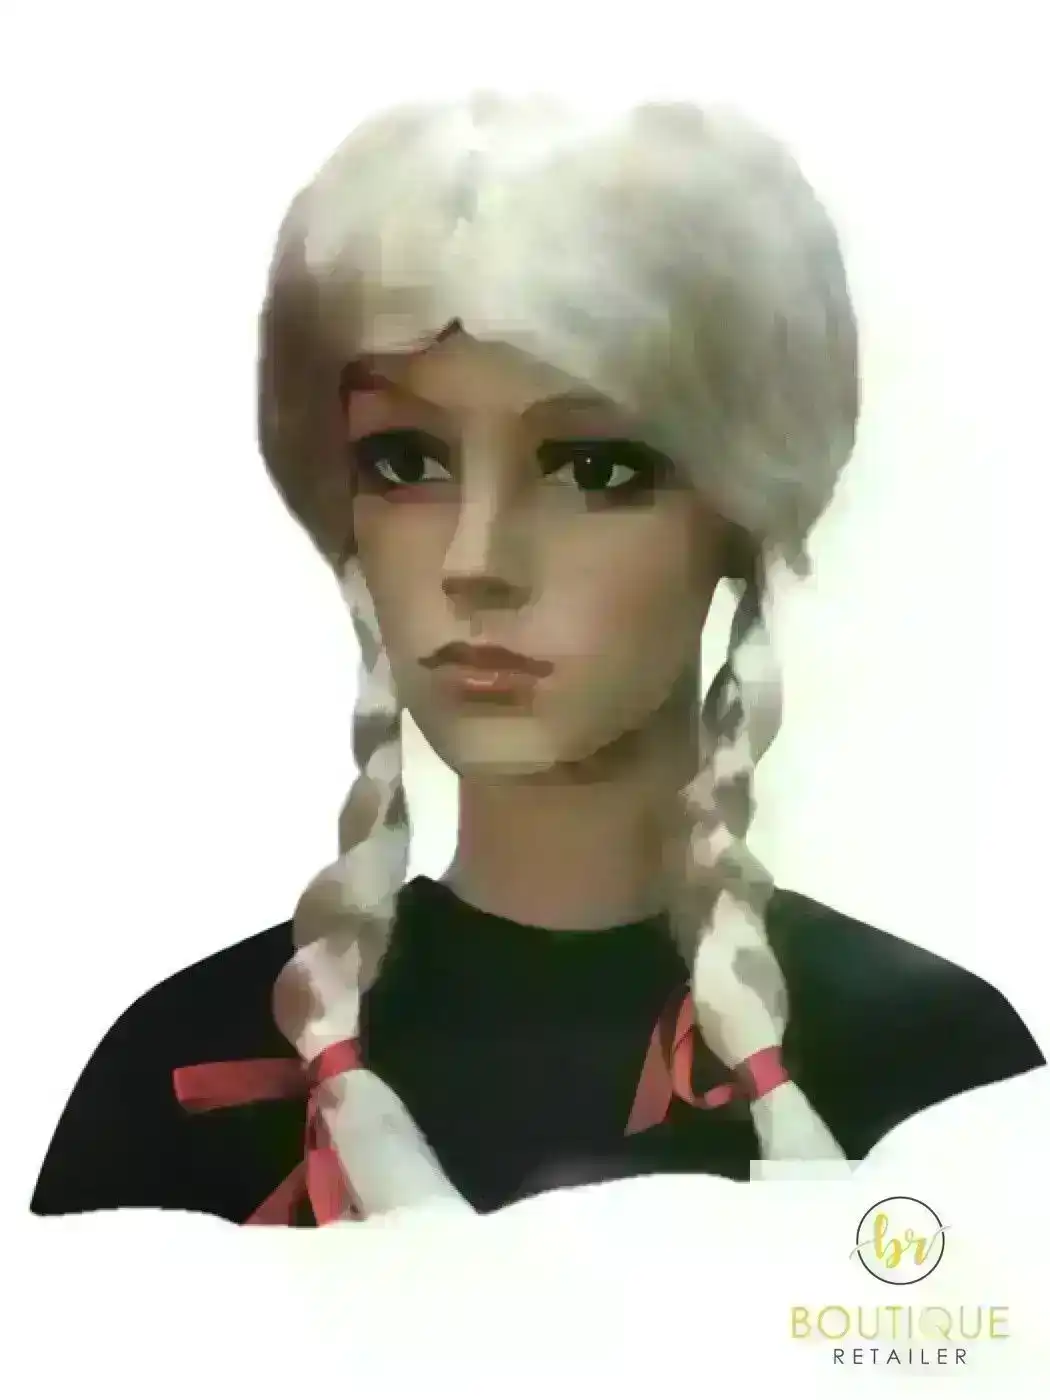 PLAITED WIG Braided Costume Party Hair Schoolgirl Dress Up School - Blonde